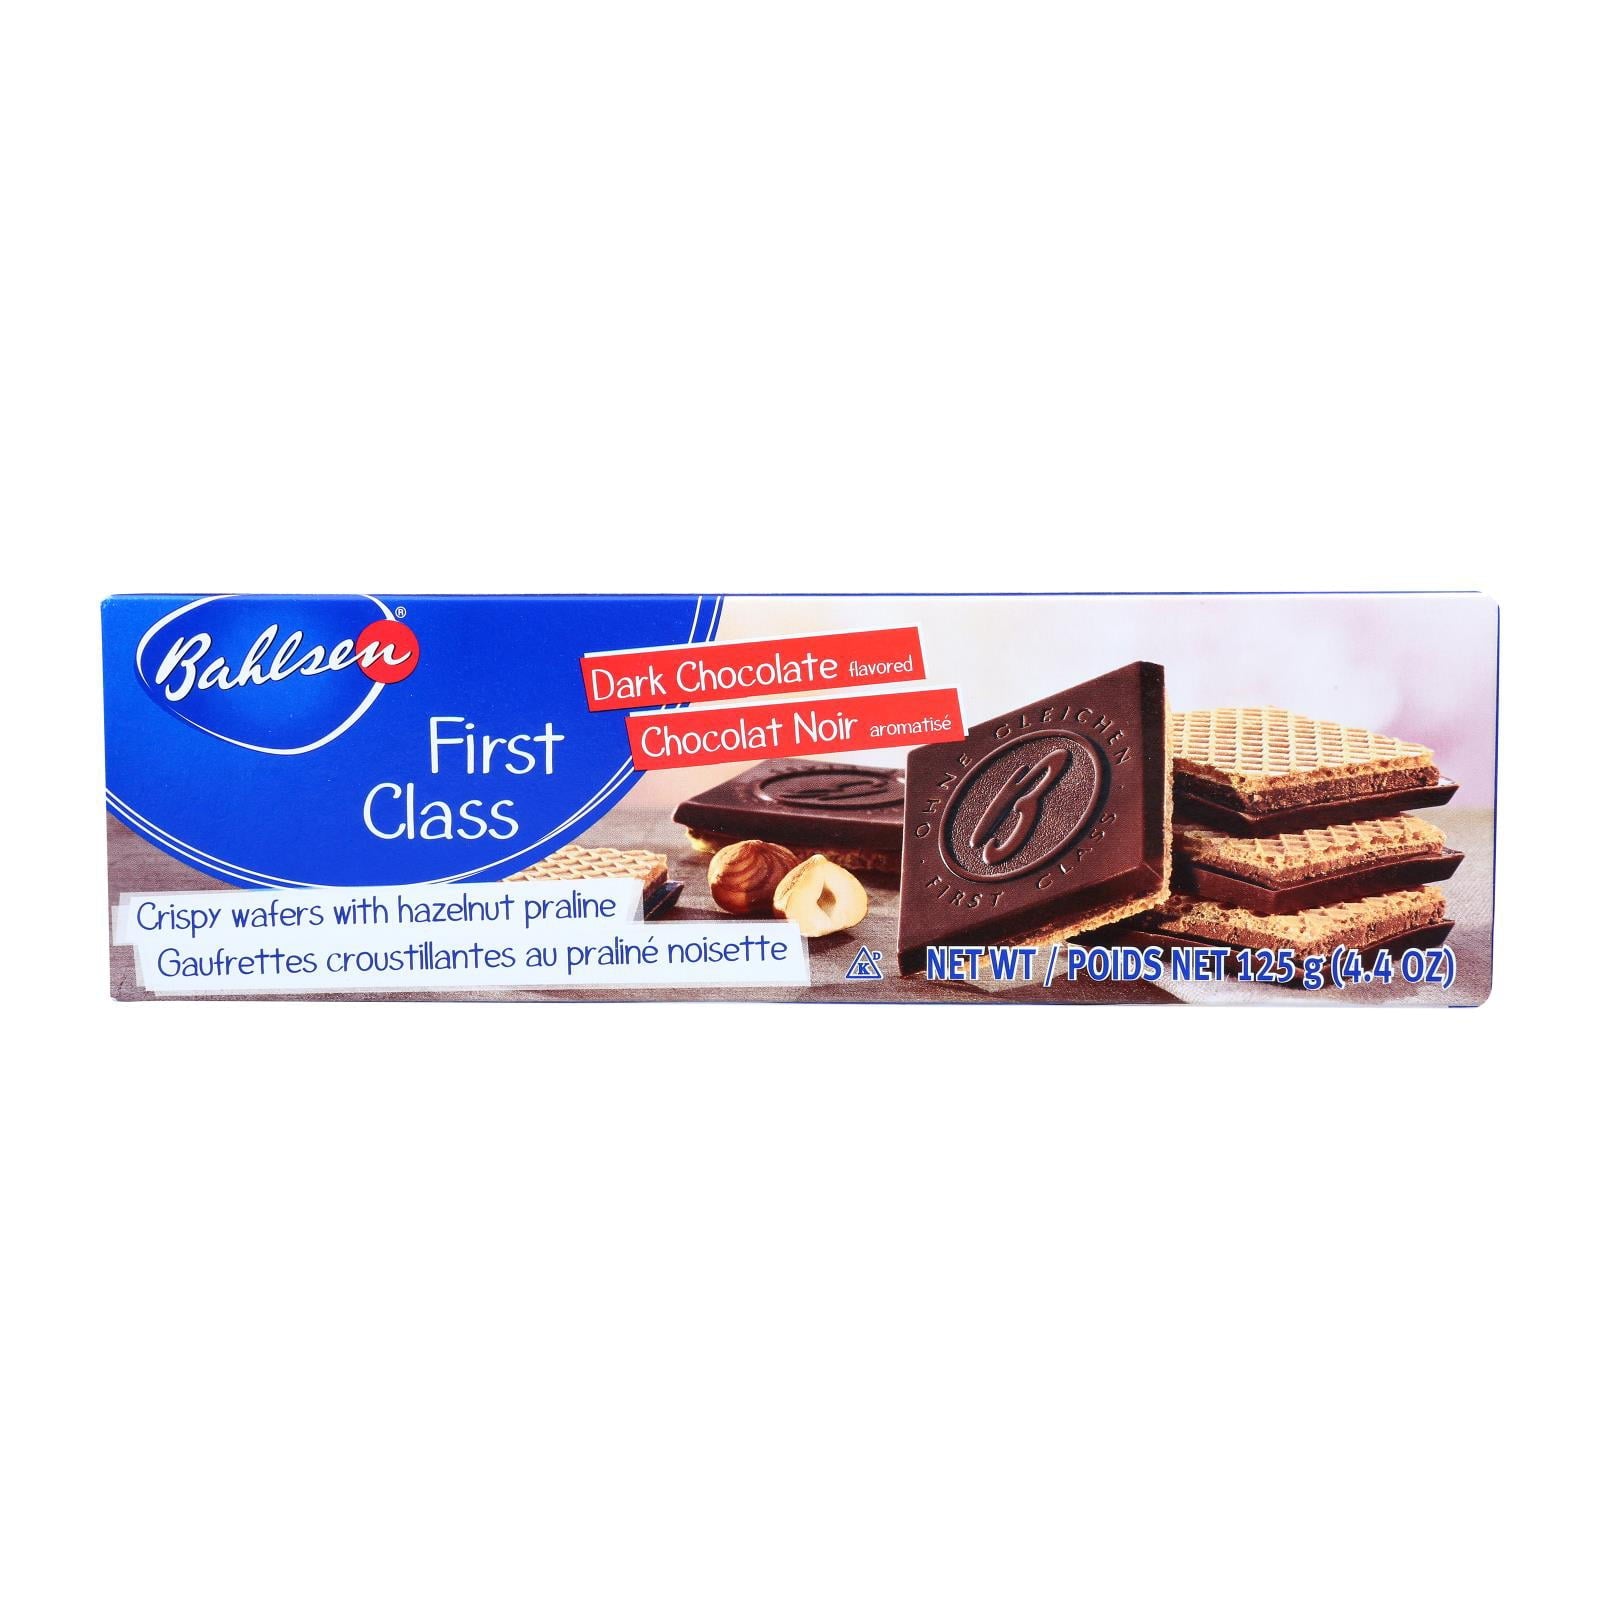 Bahlsen First Class Dark Chocolate Cookies 4.4 oz Box